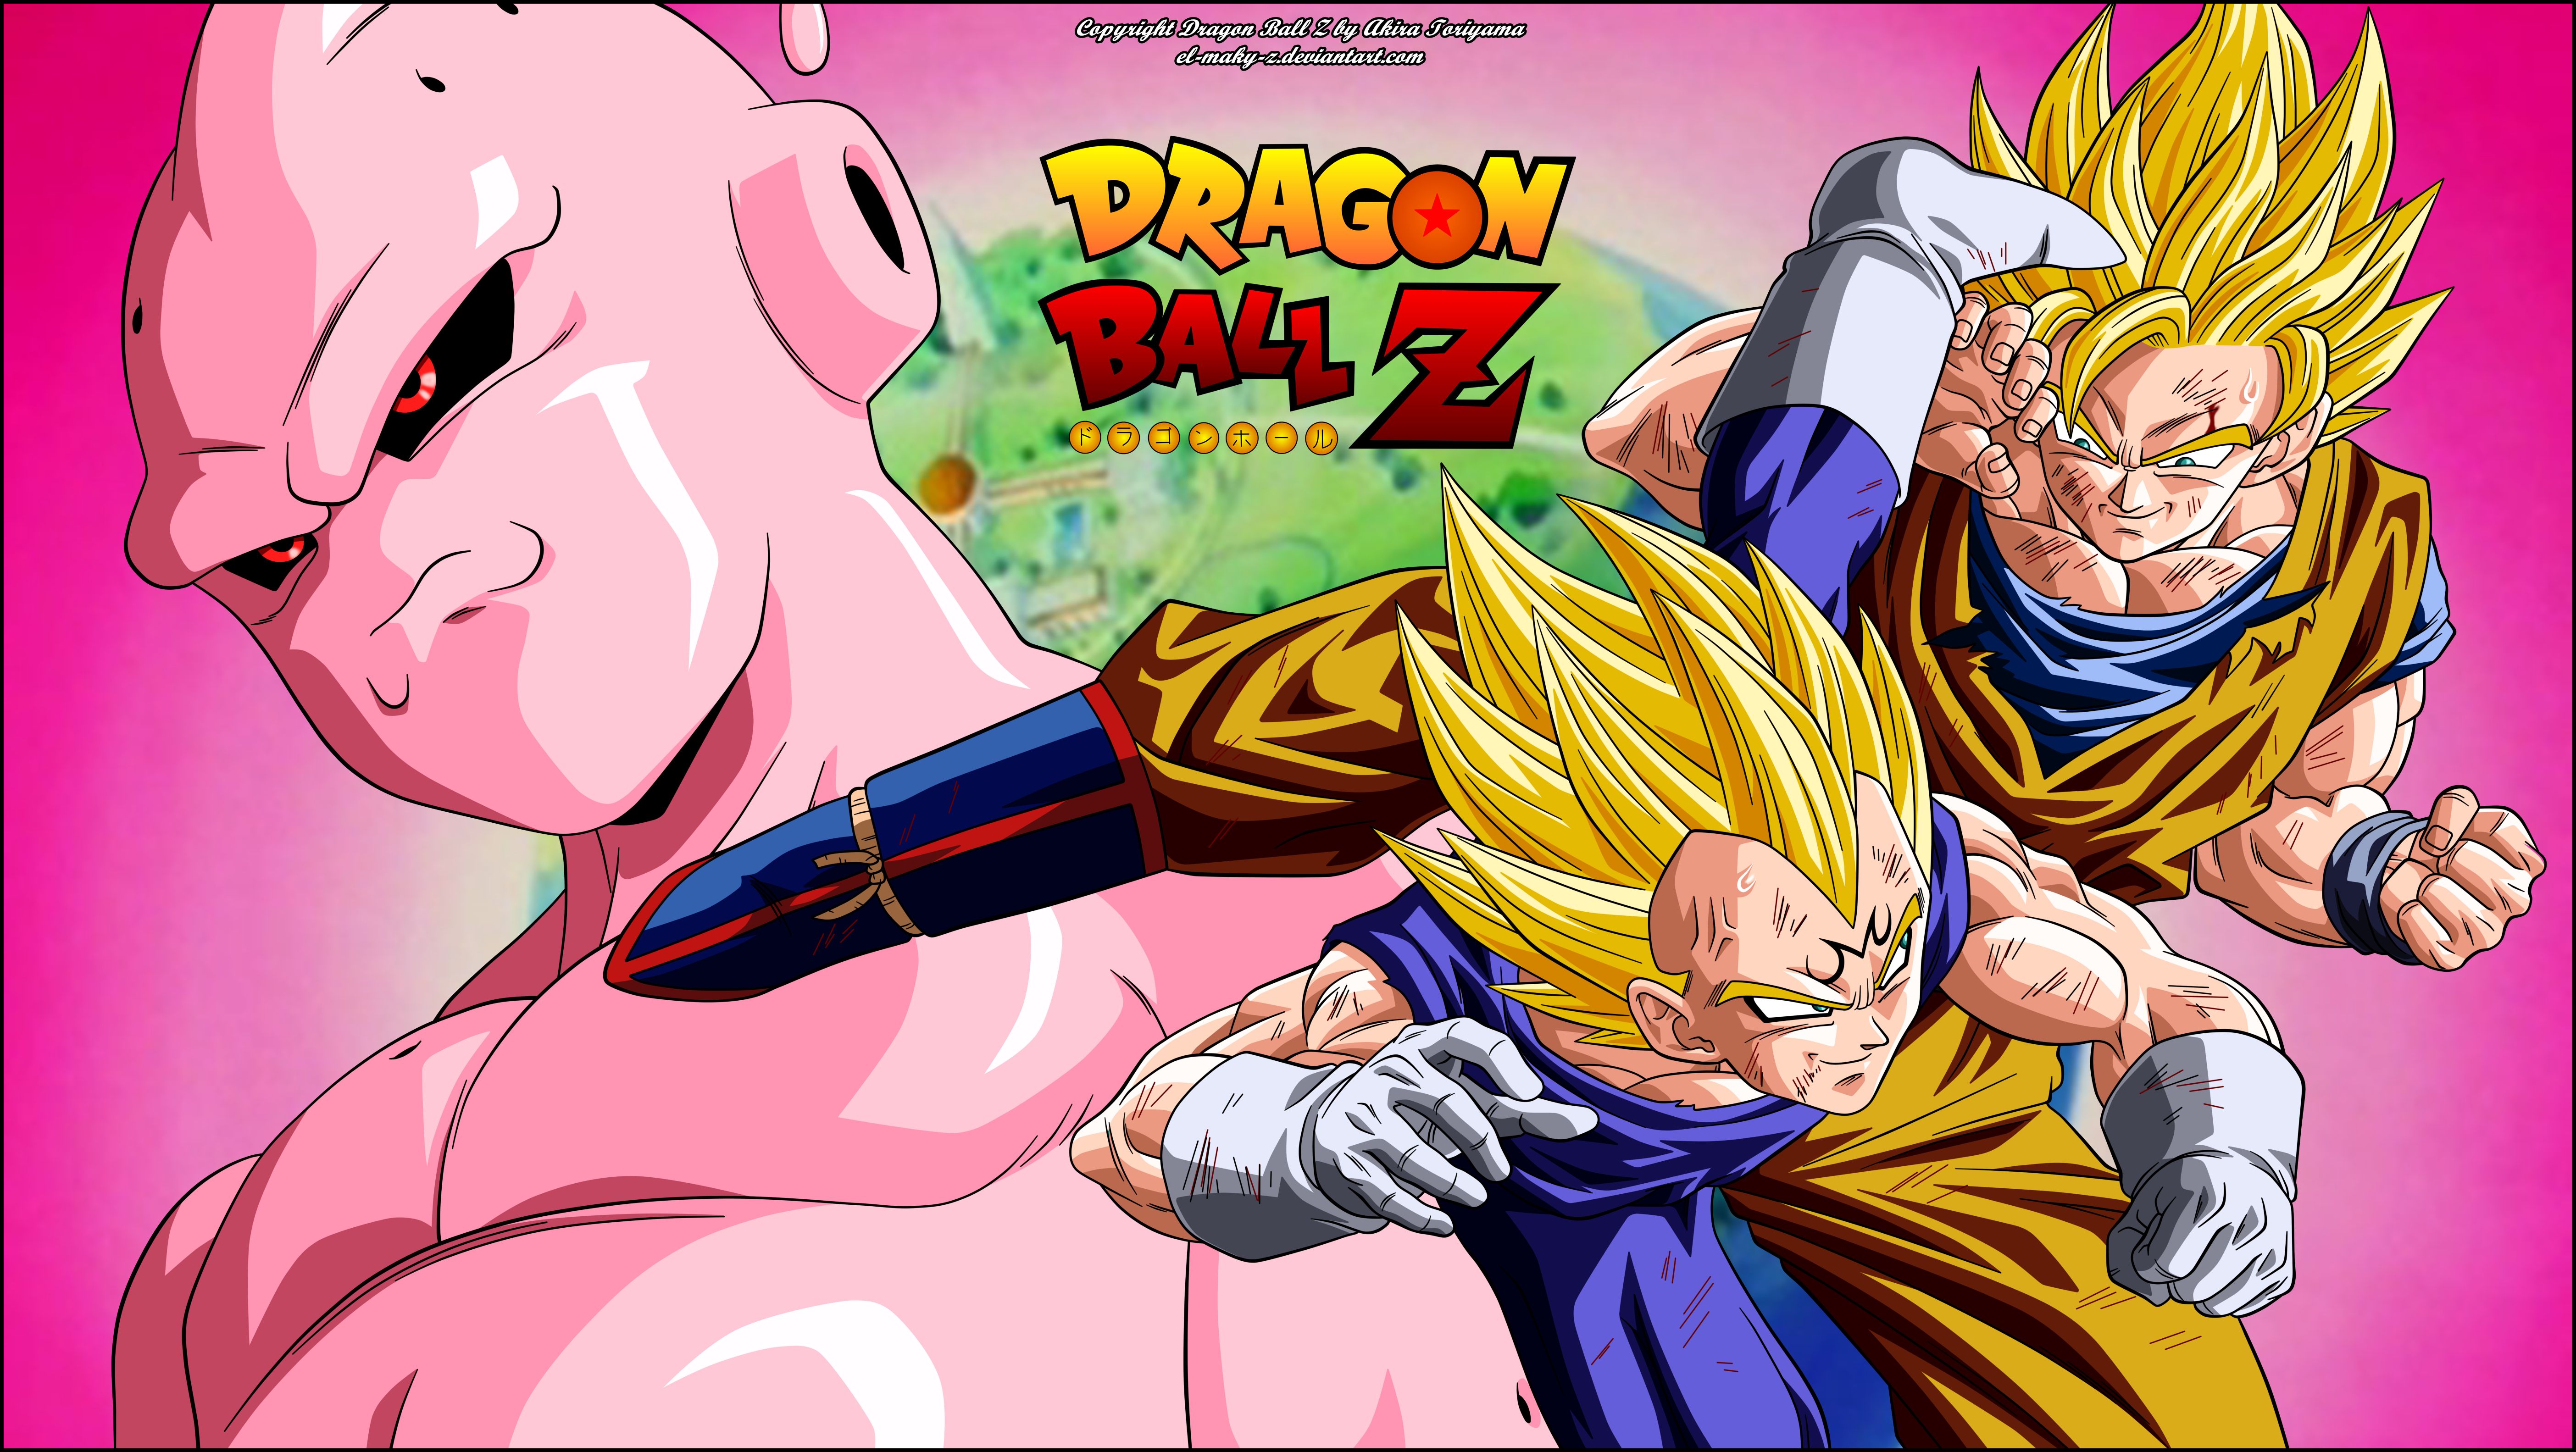 Descarga gratis la imagen Dragon Ball Z, Animado, Goku, Dragon Ball, Vegeta (Bola De Dragón), Majin Boo en el escritorio de tu PC